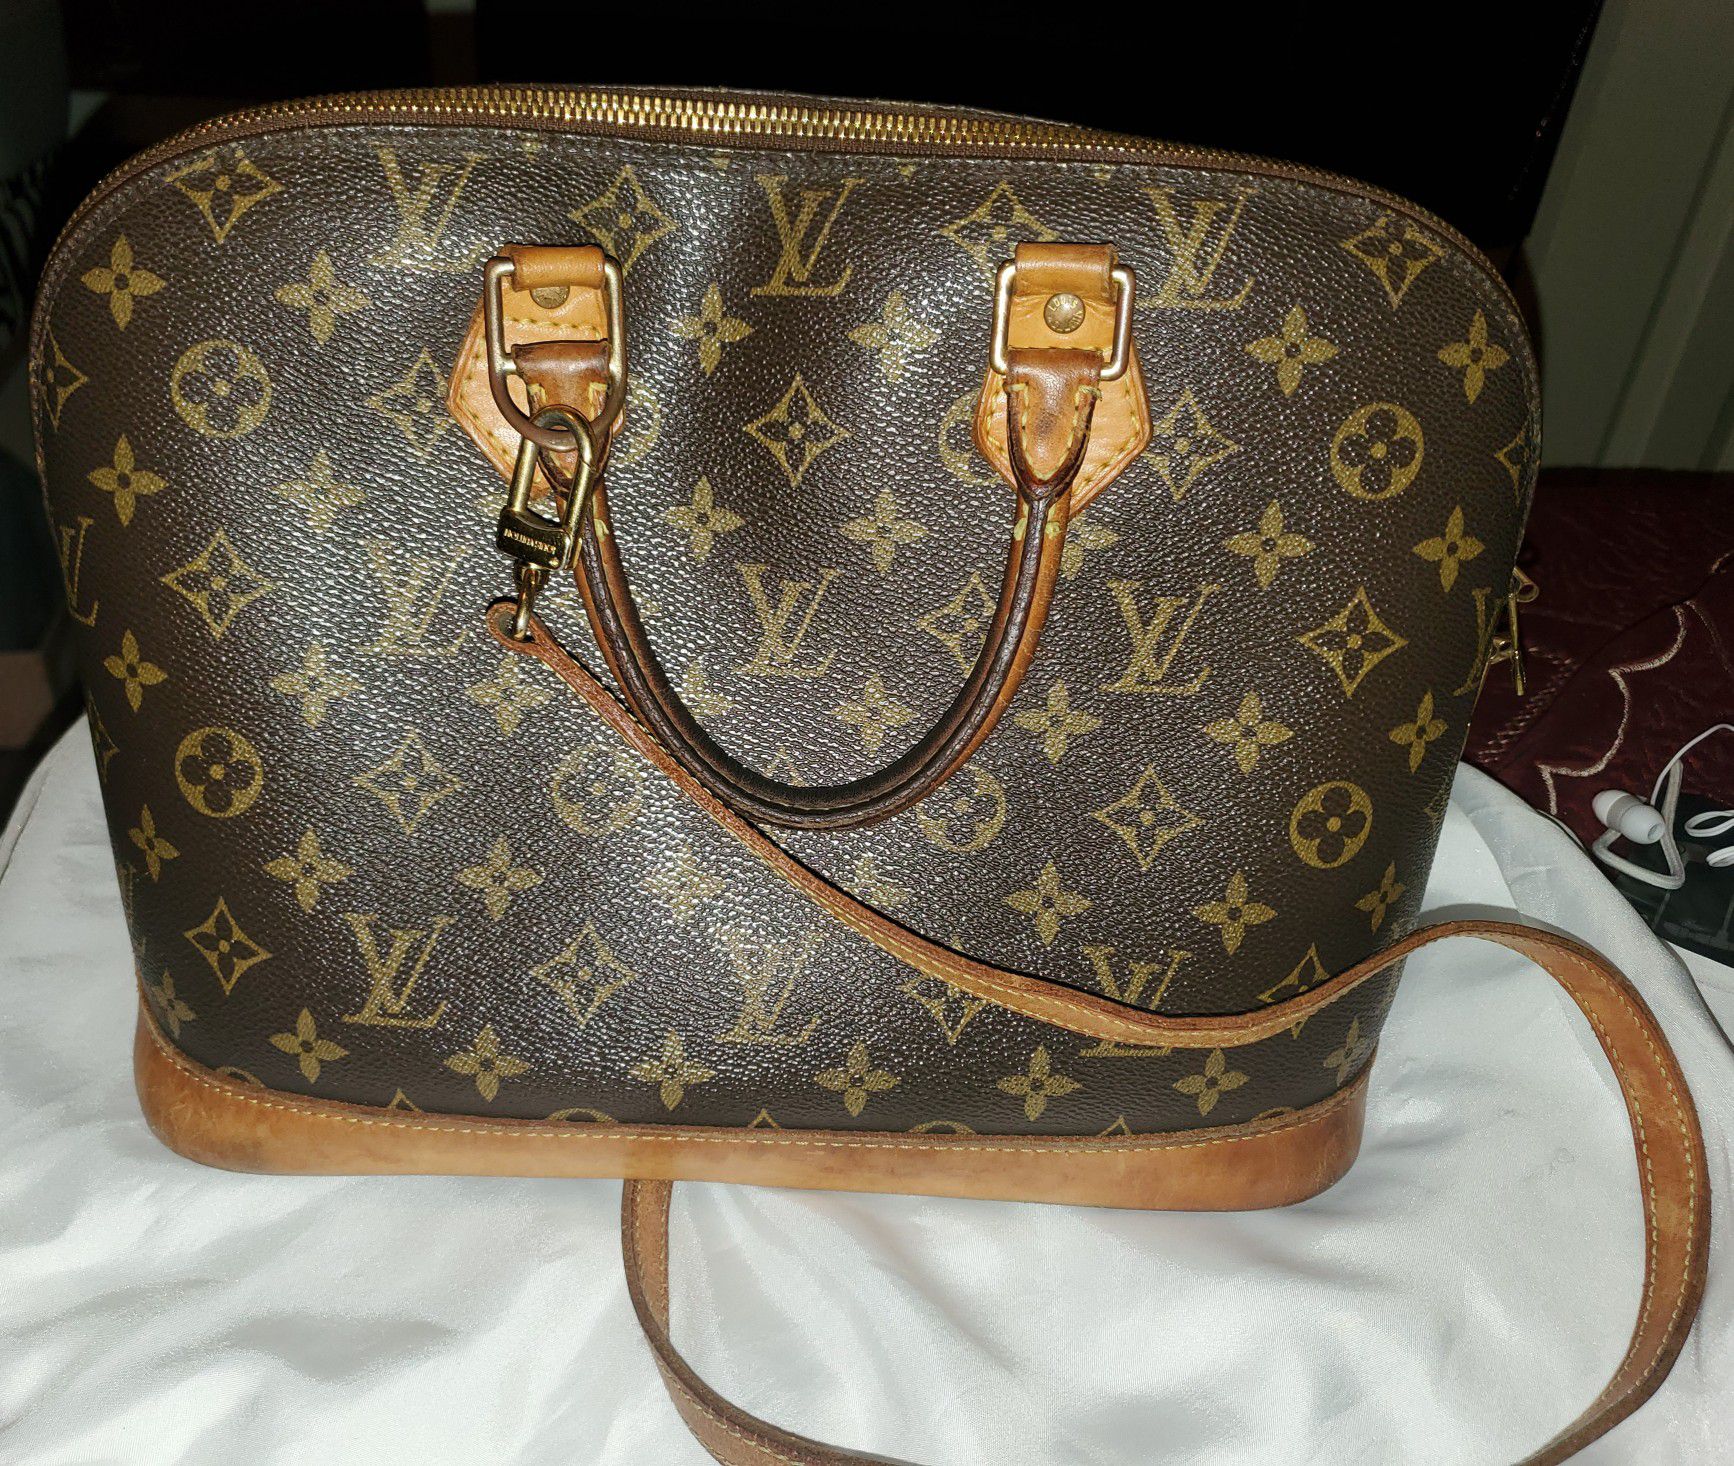 Authentic Louis Vuitton Alma handbag